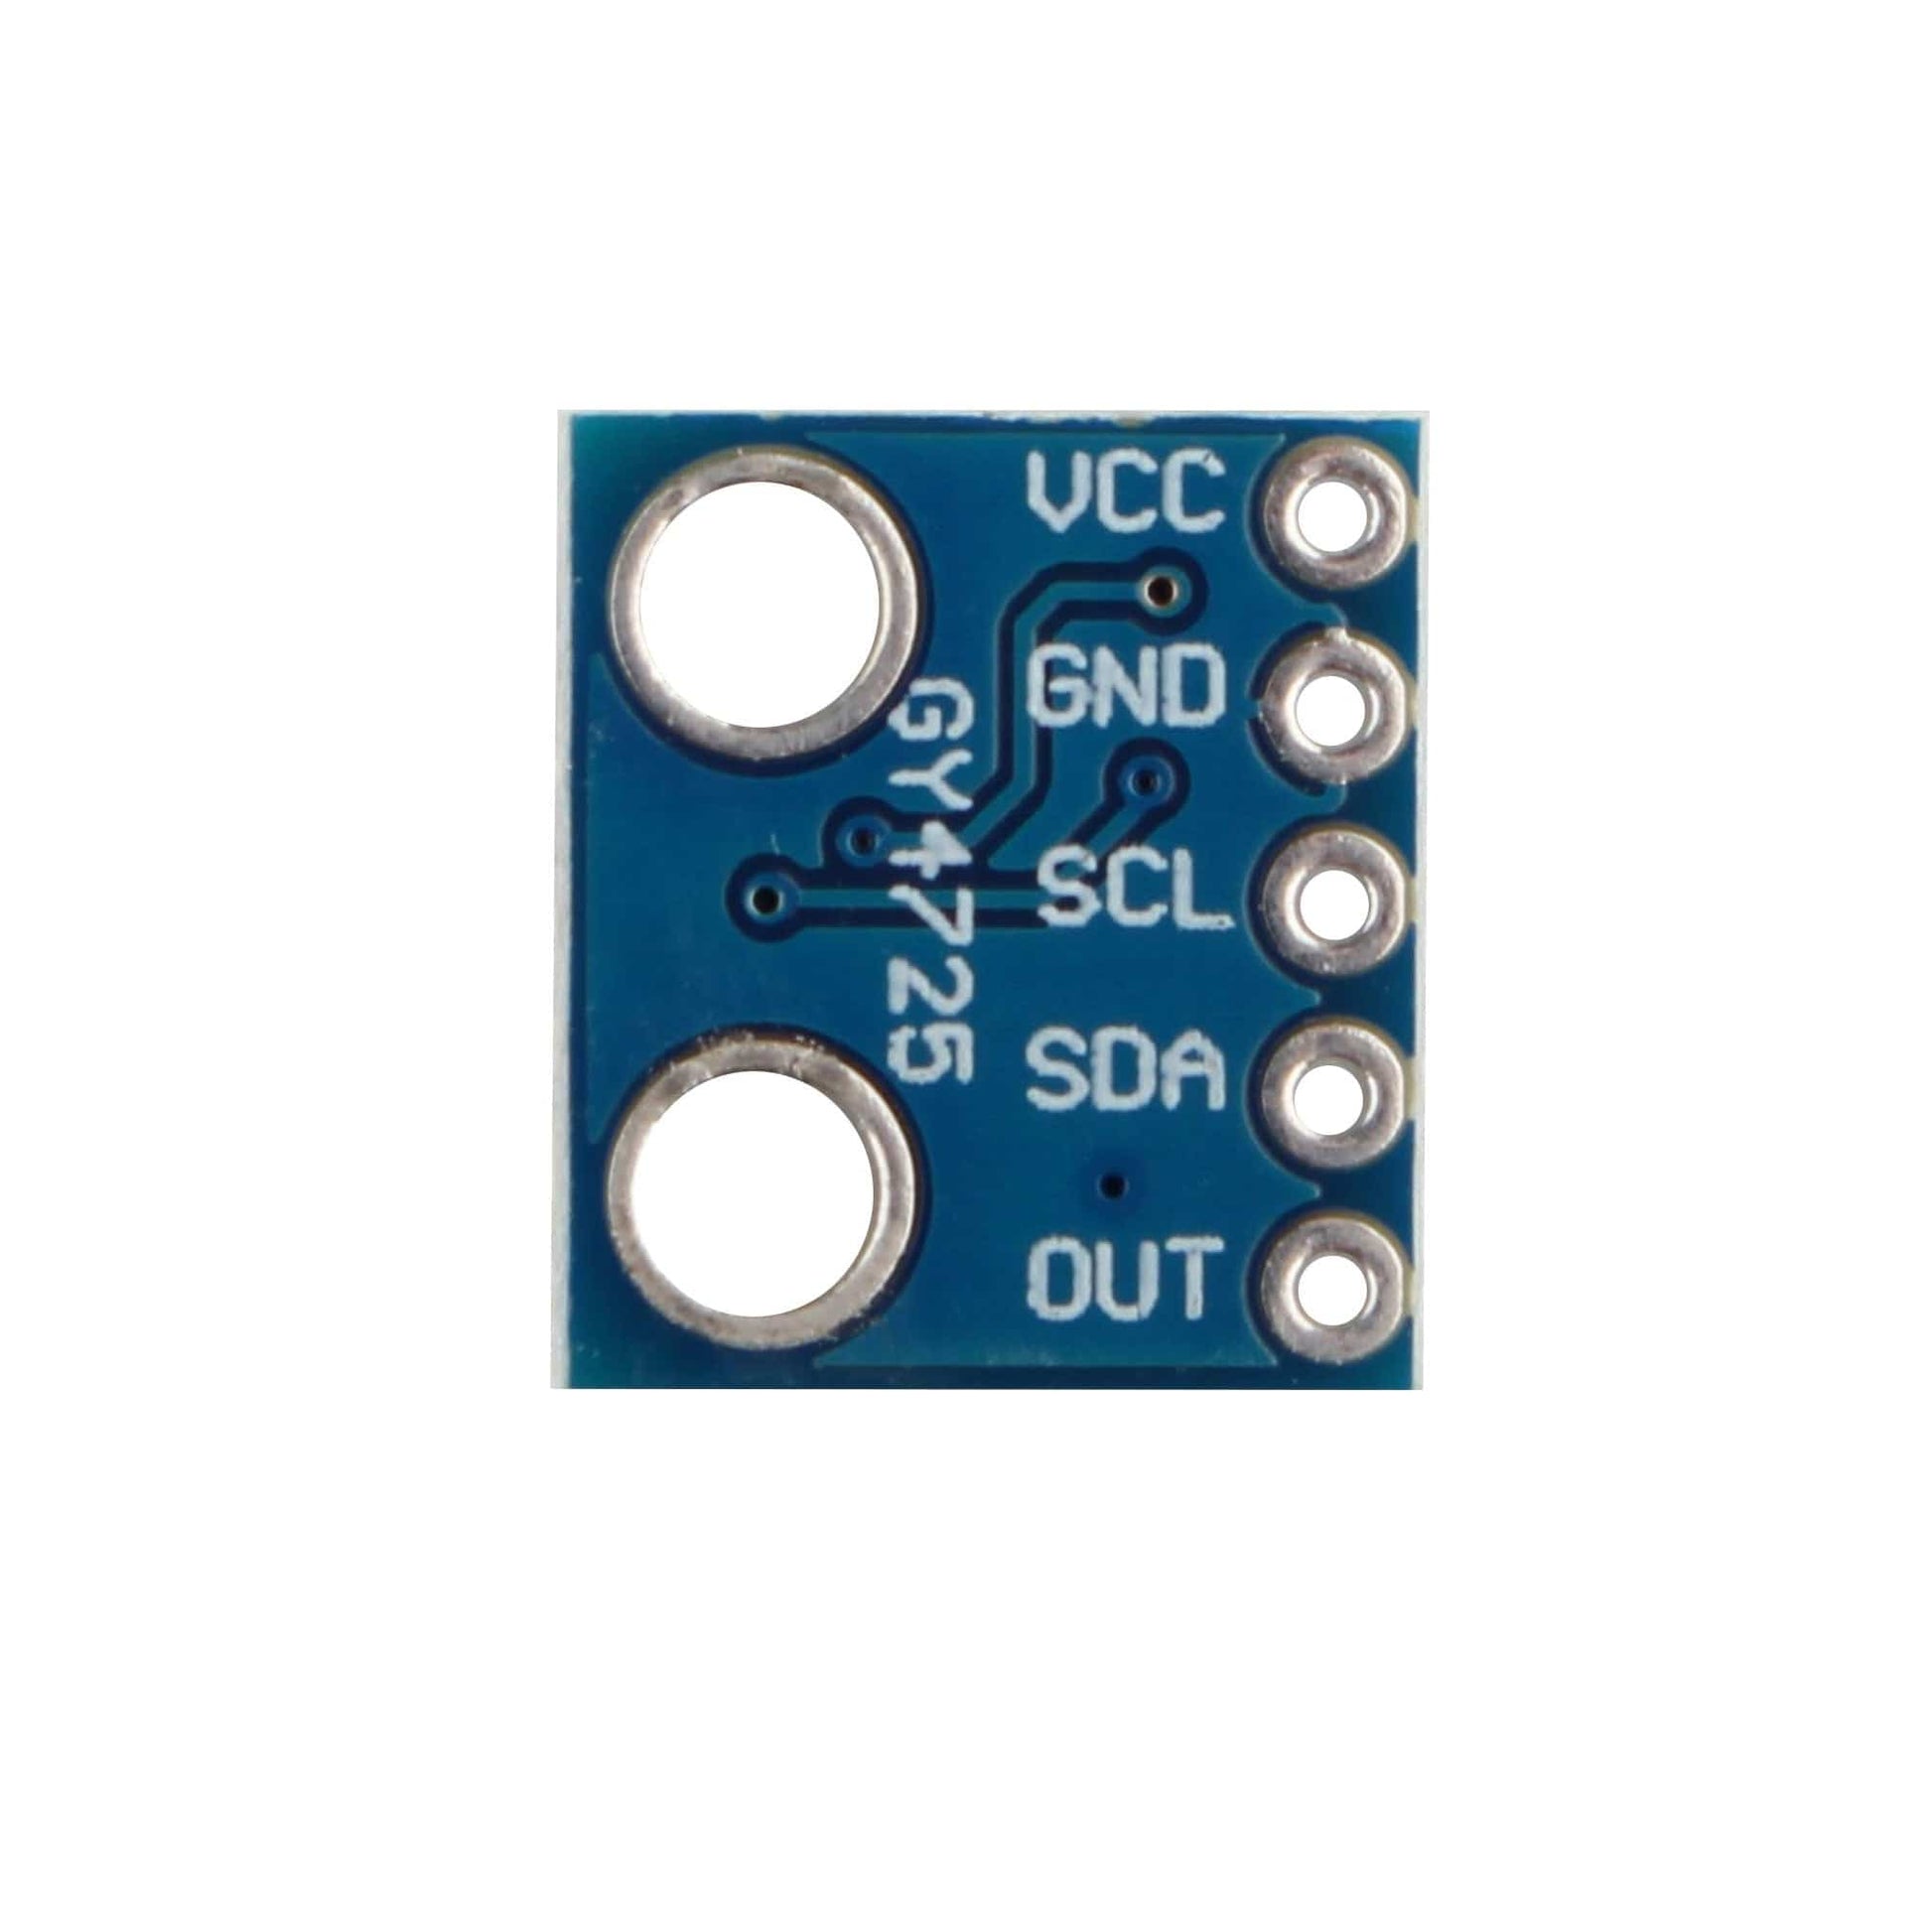 GY-4725 I2C DAC Breakout MCP4725 Digital Analog Converter